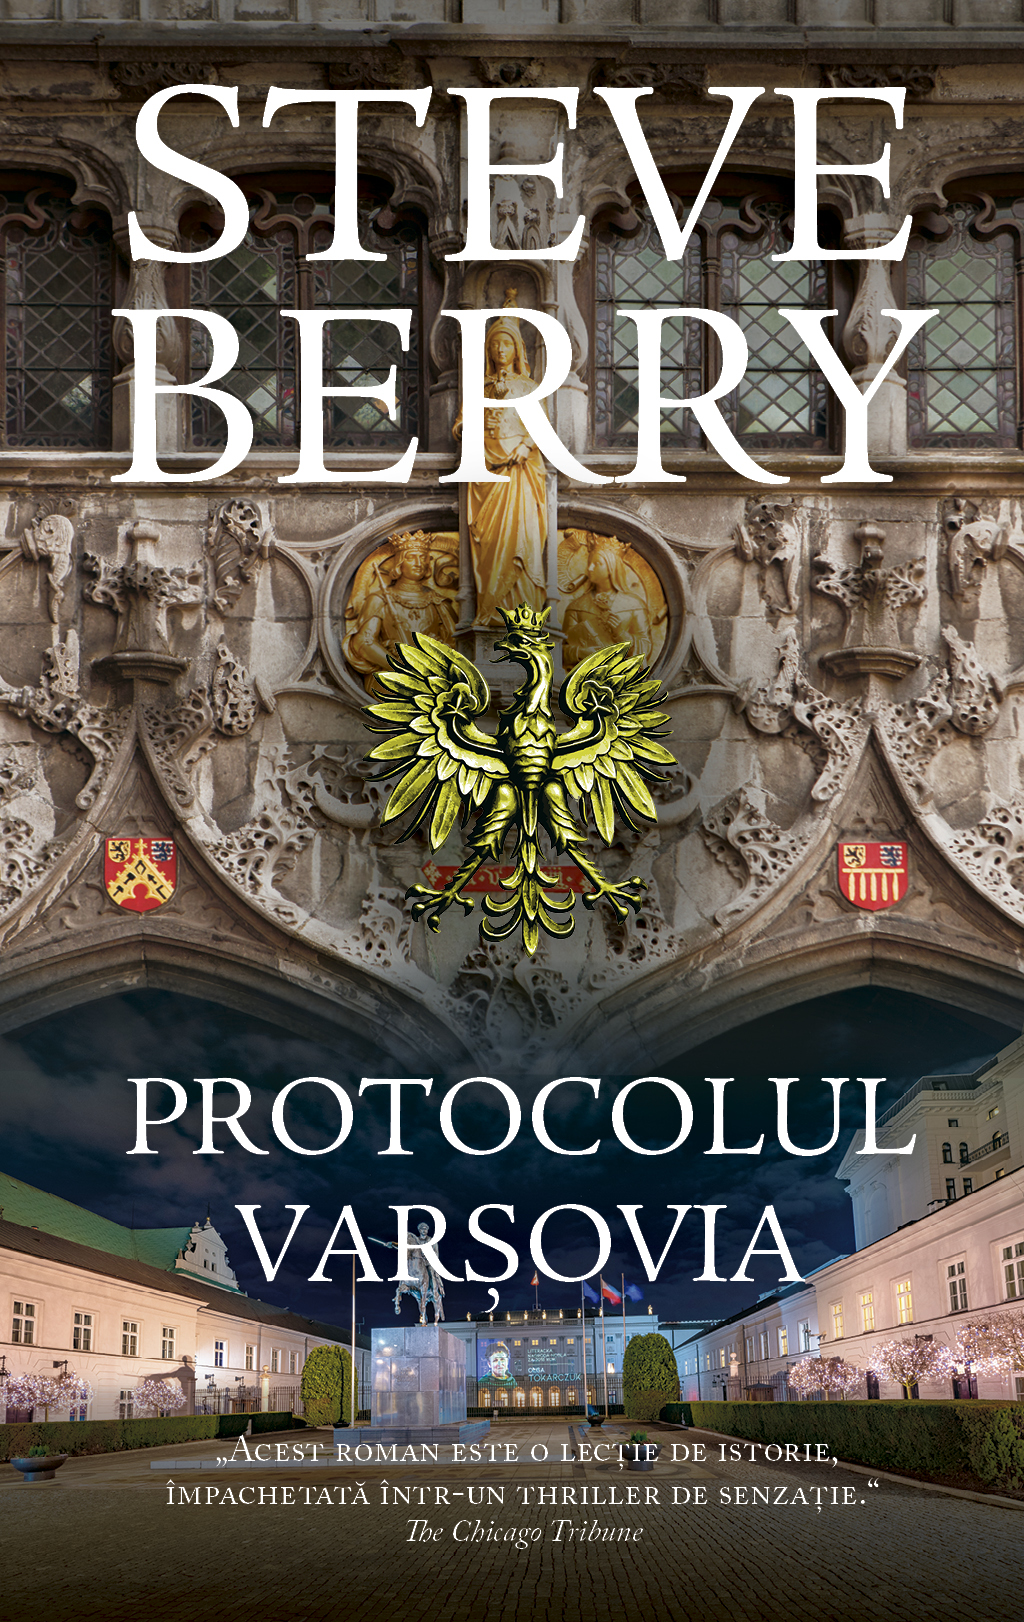 Protocolul Varsovia | Steve Berry carturesti.ro poza bestsellers.ro